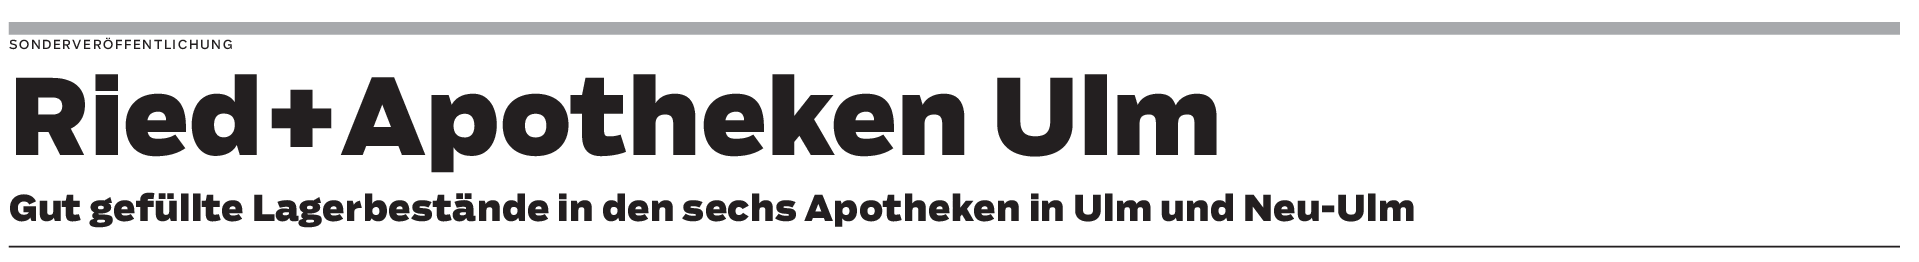 Arzneimittelmangel: Ried+Apotheken Ulm kümmert sich!